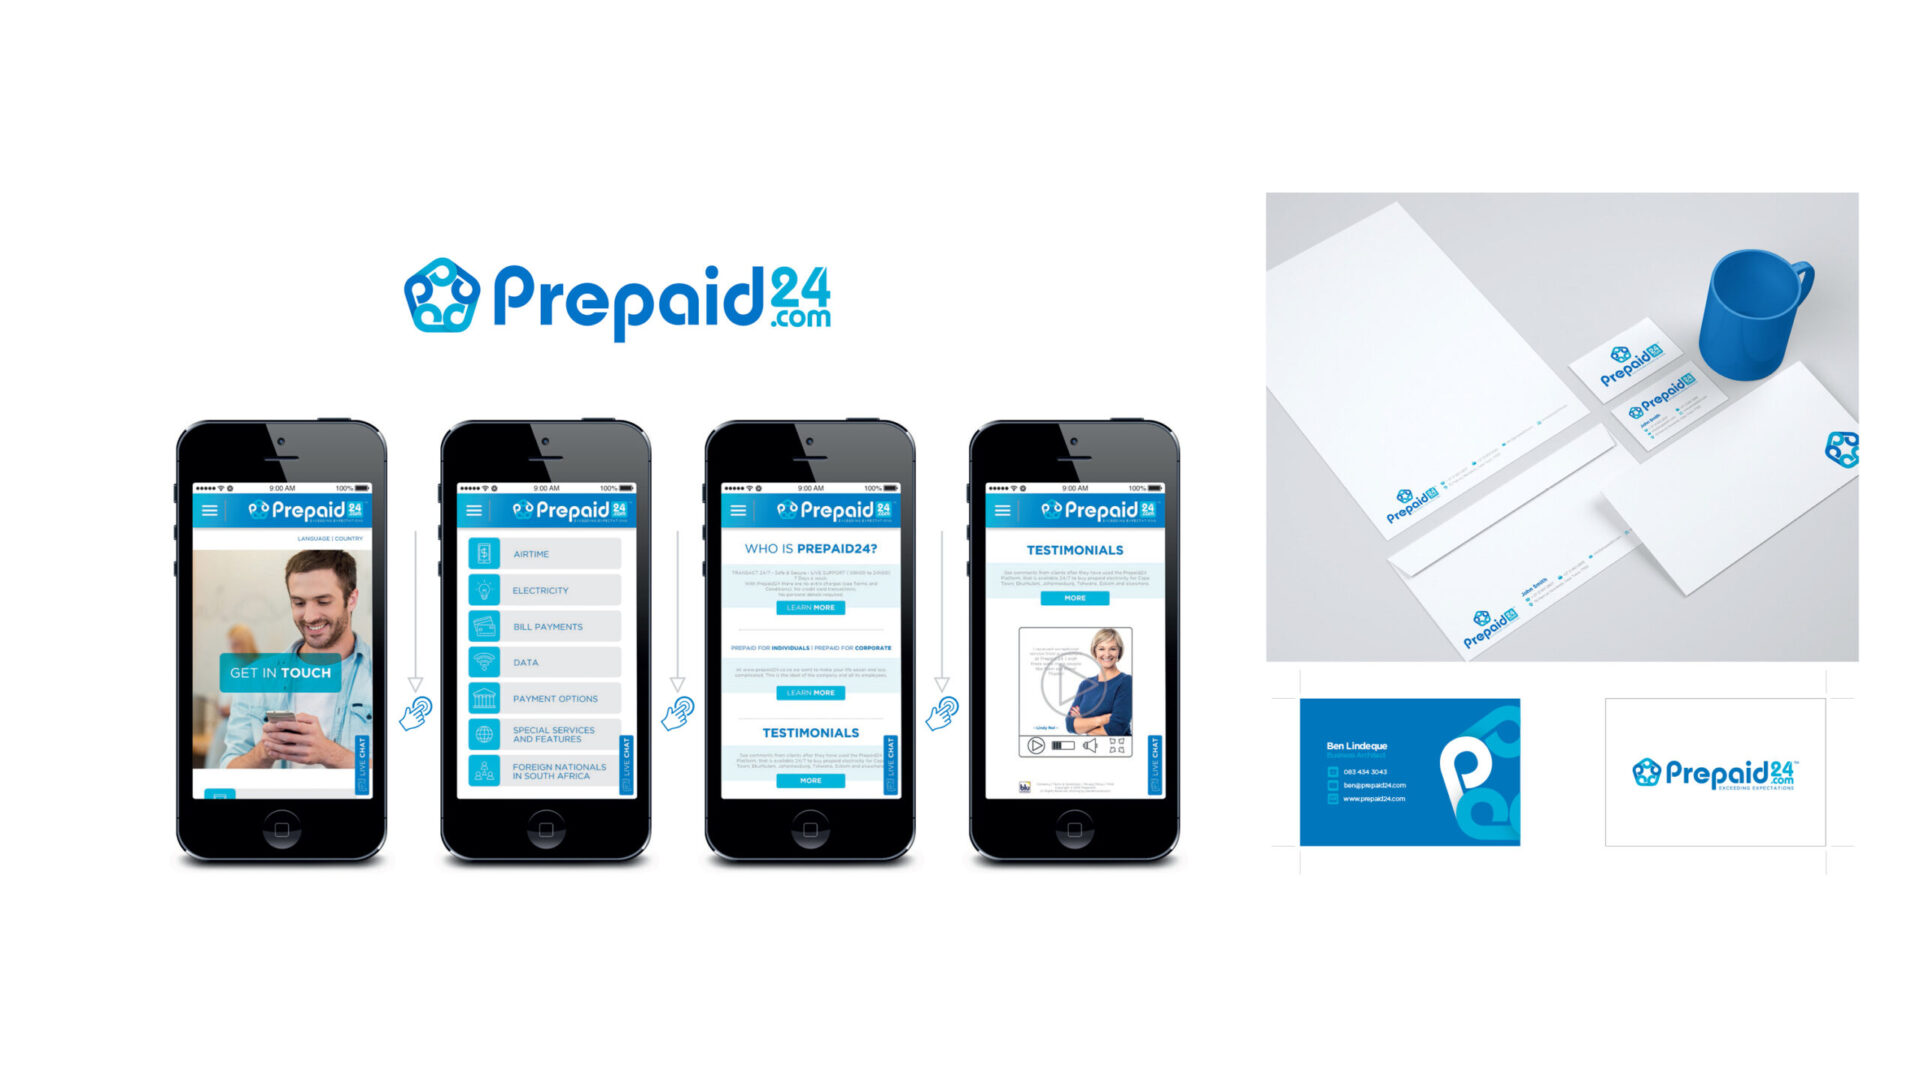 prepaid 24 corporate identity and digital design